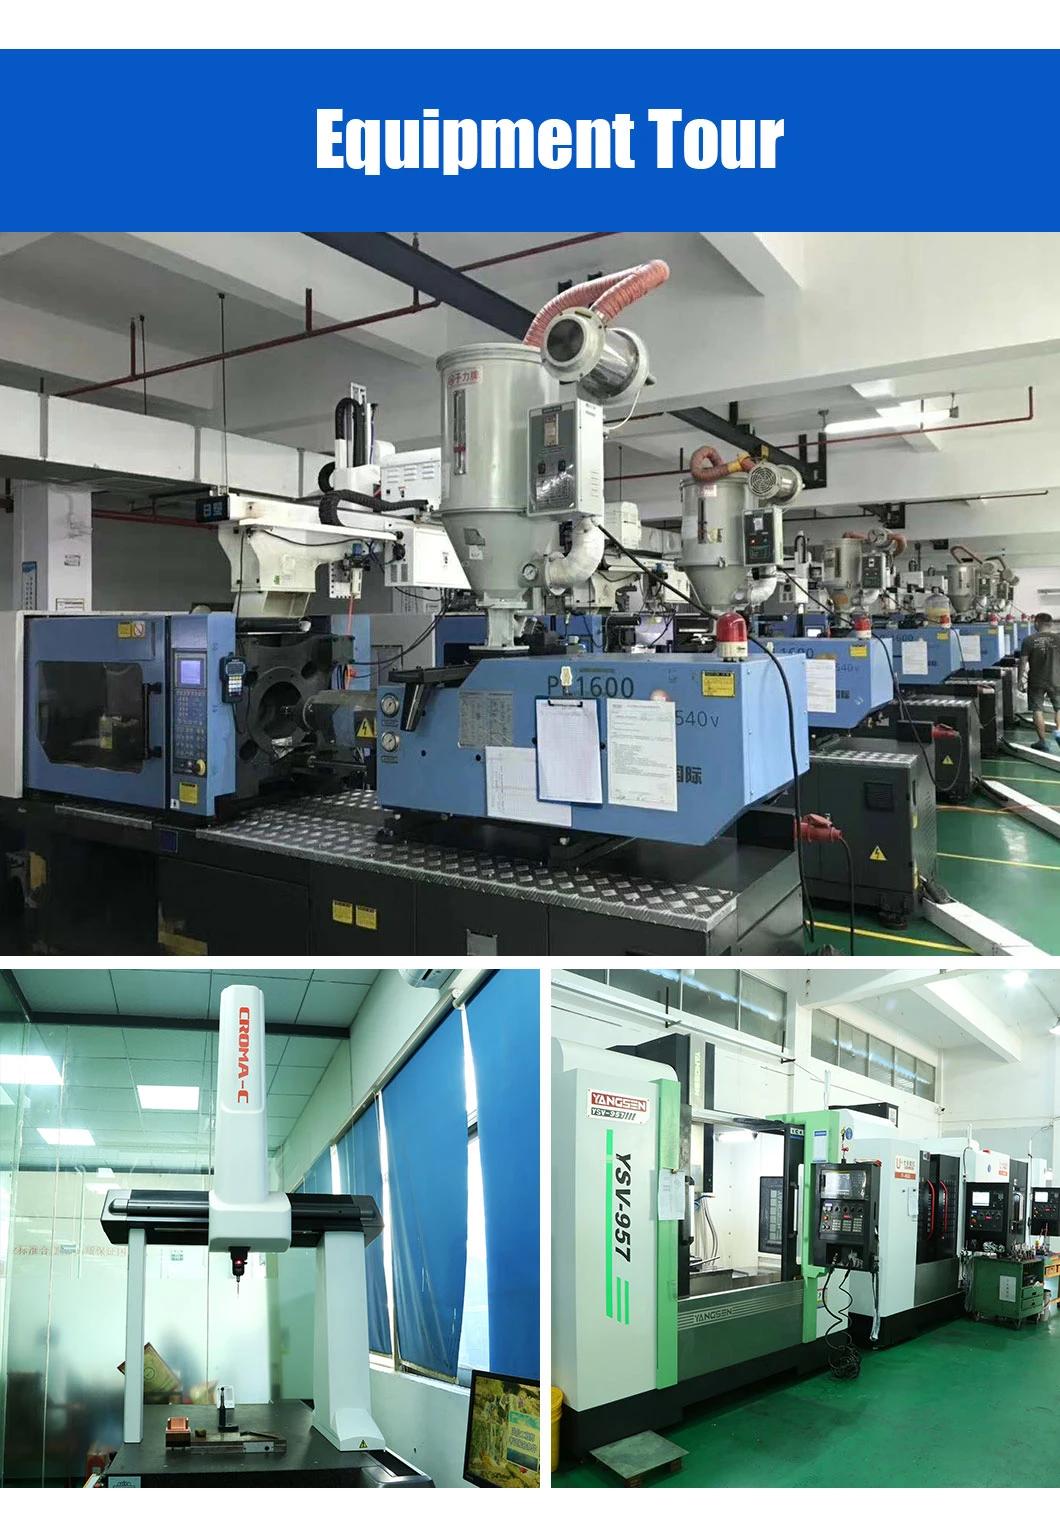 Plastic Injection Mould for Laser Machine Interface Enclosure, Plastic Parts, Custom Parts OEM ODM